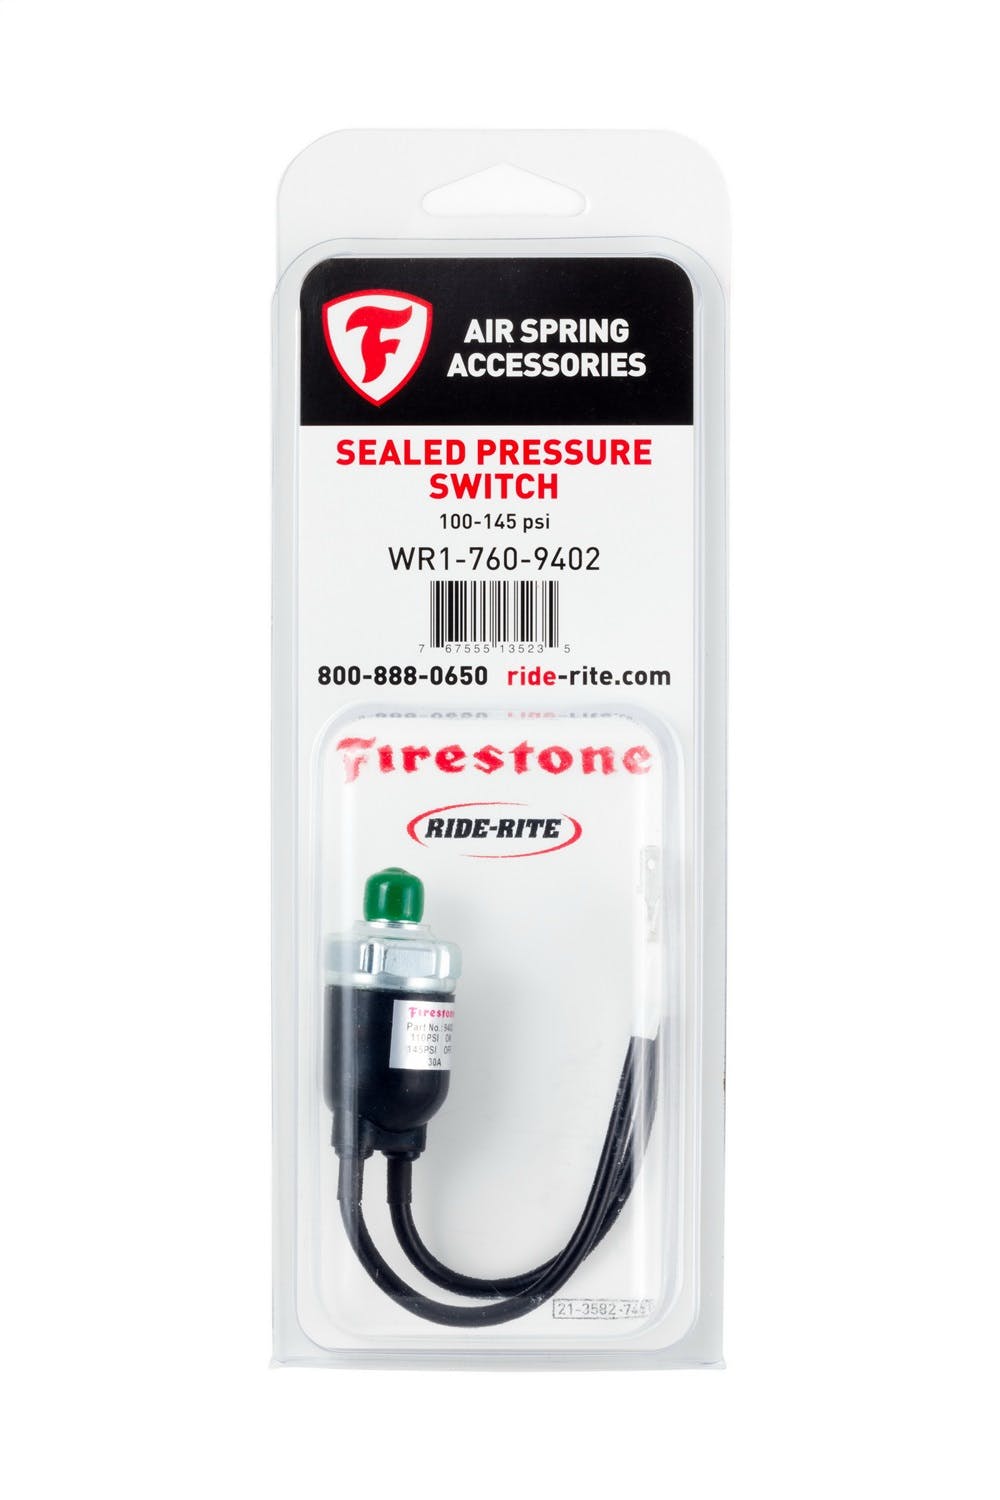 Firestone Ride-Rite 9402 Sealed Pressure Switch 110-145 psi